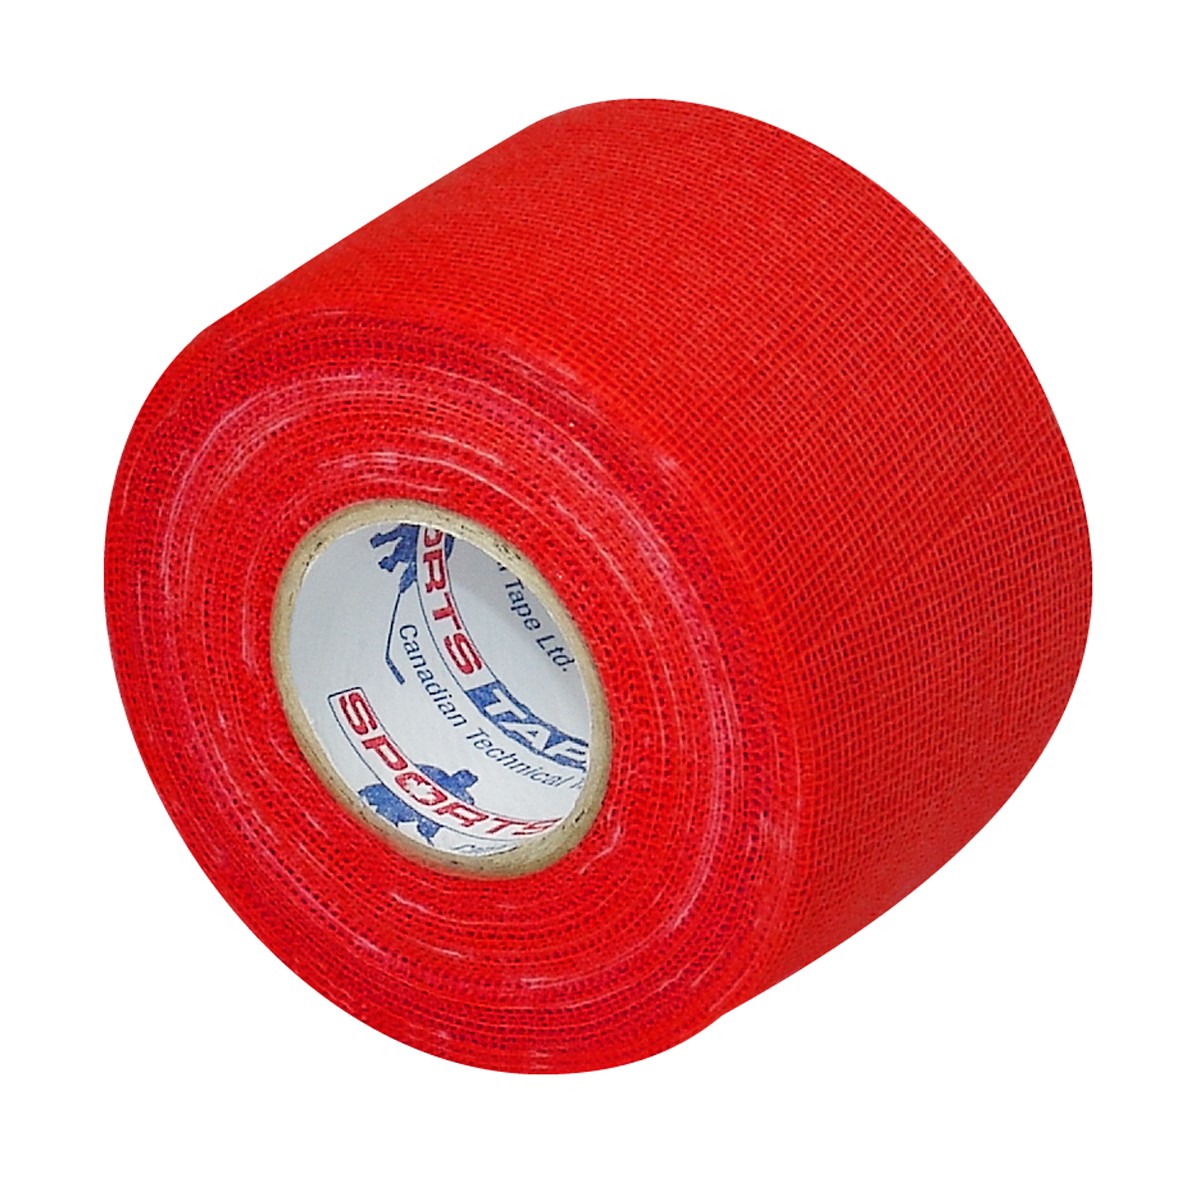 SIG Hockey Tape Made in Canada by SportsTape- Single Roll Sock Tape (2